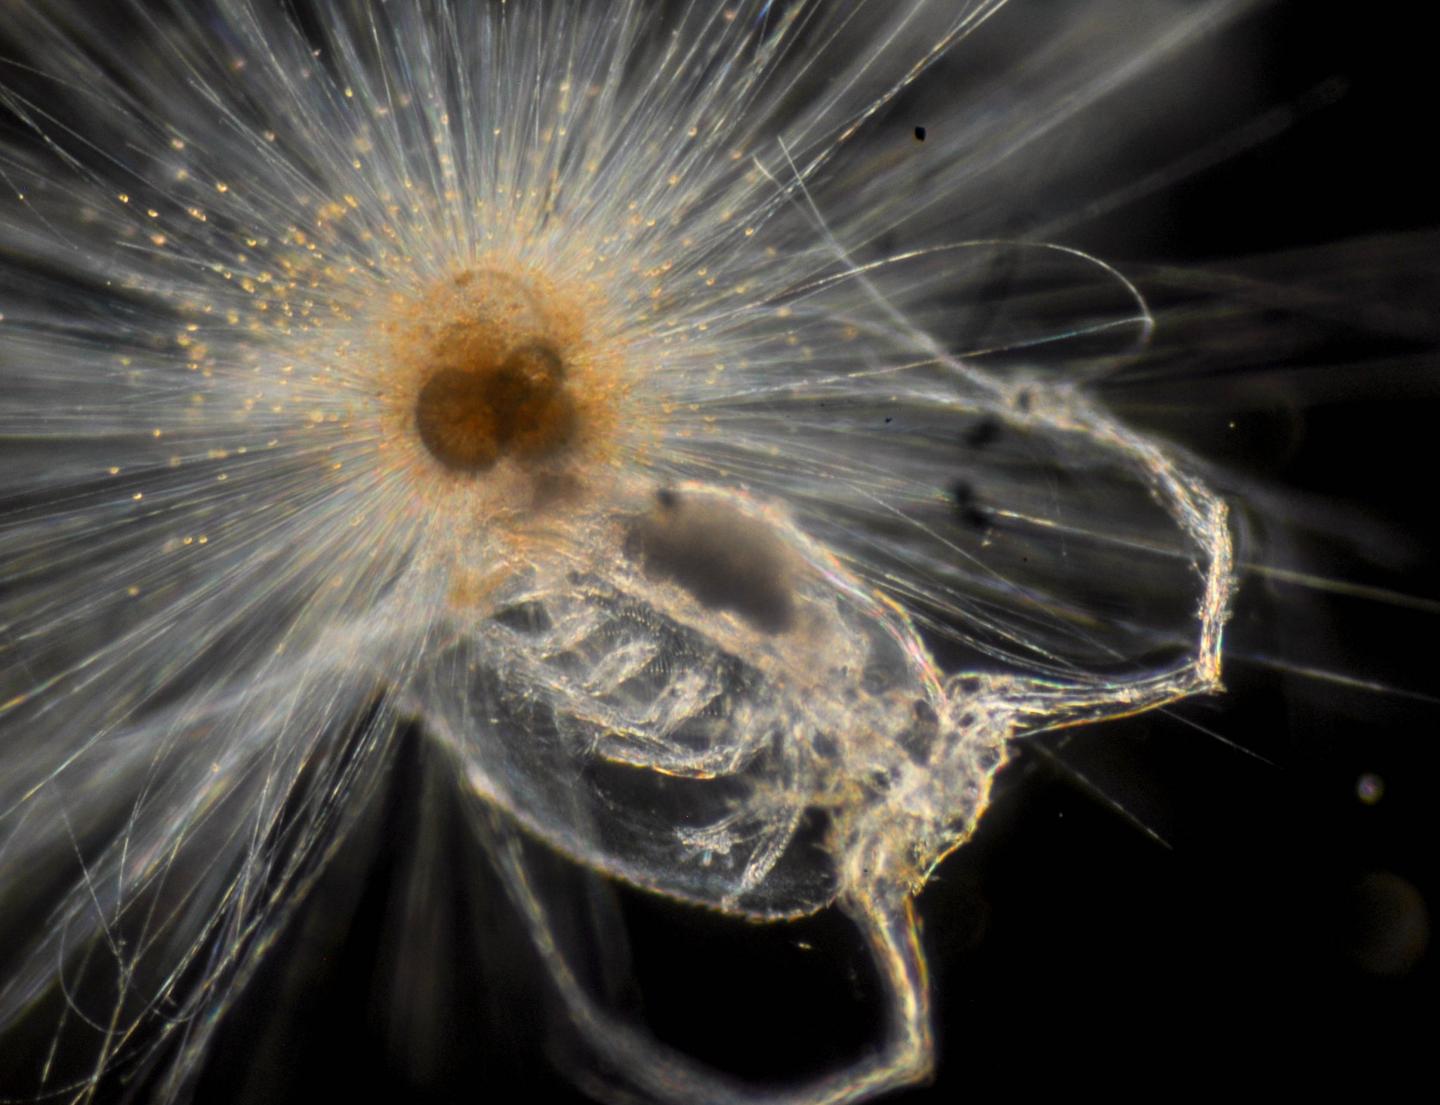 a foraminifera eating a copepod